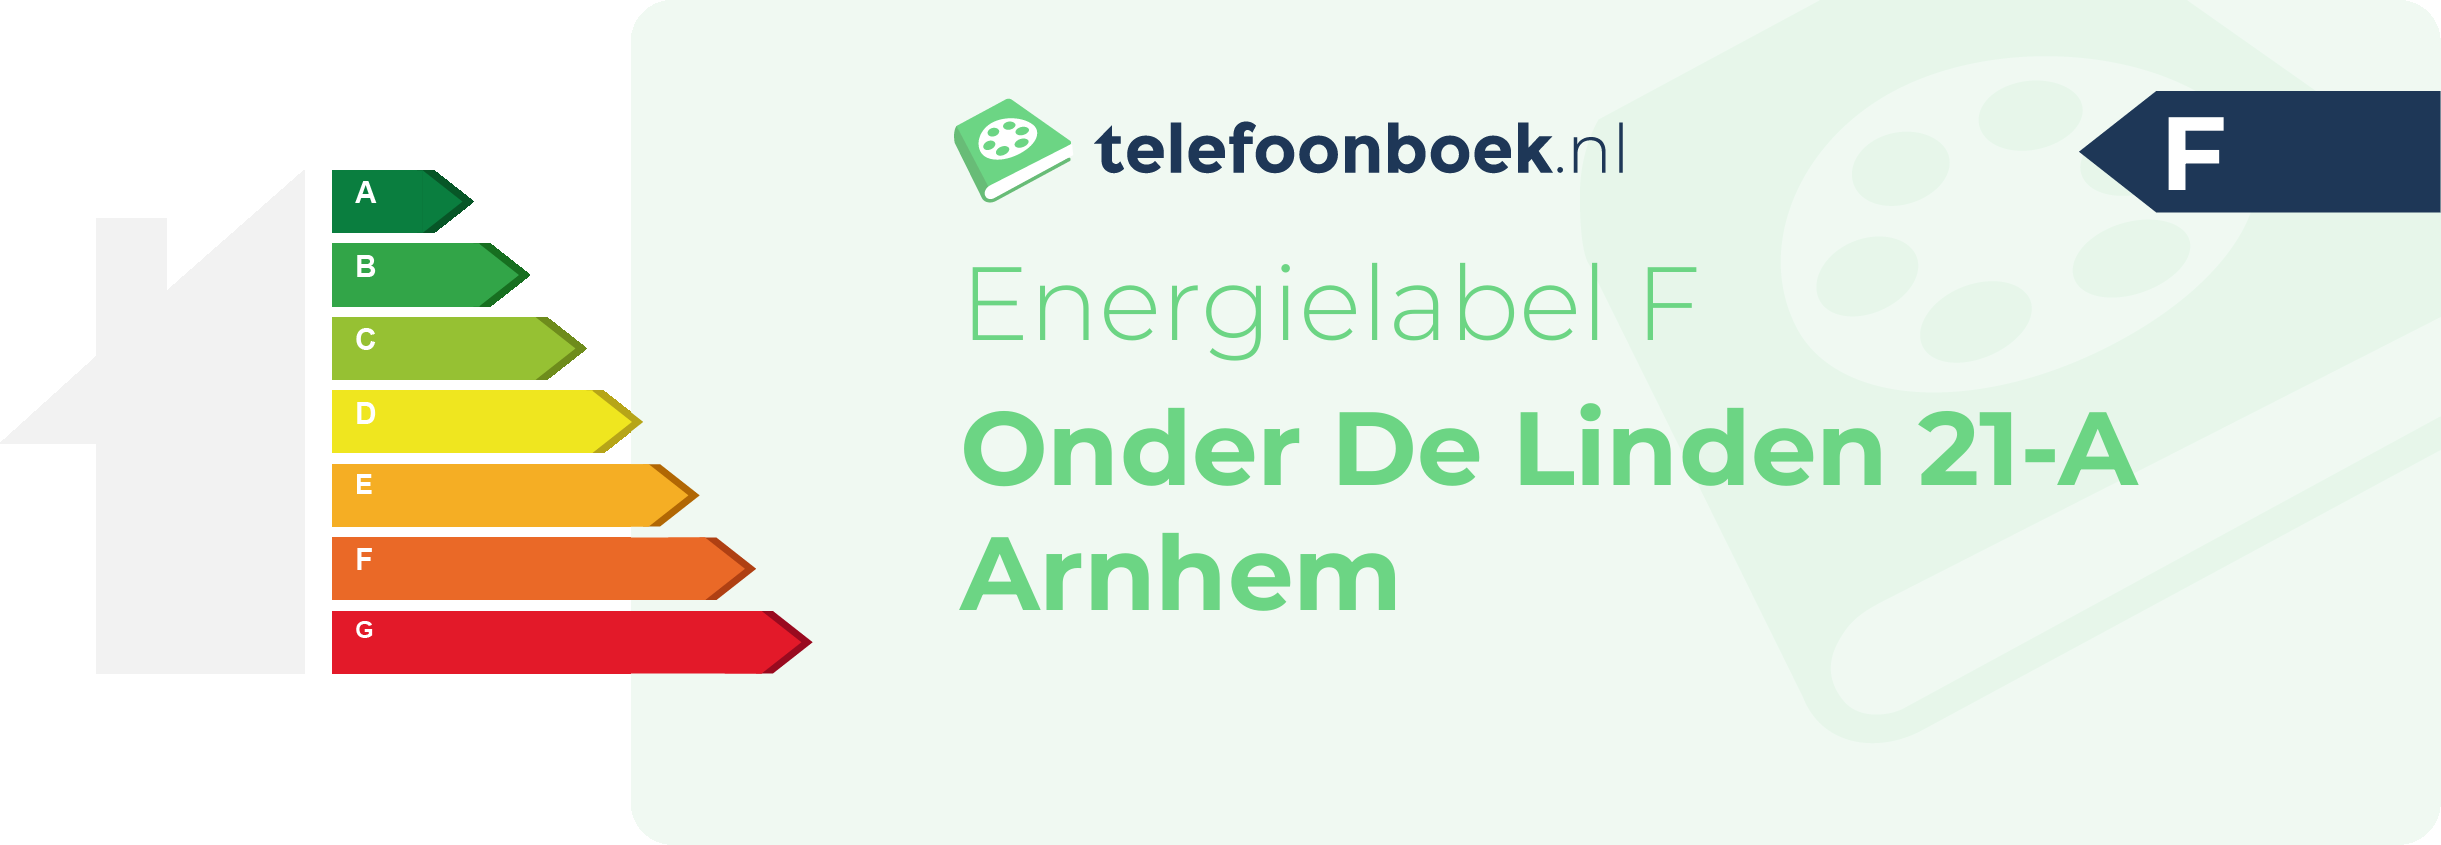 Energielabel Onder De Linden 21-A Arnhem